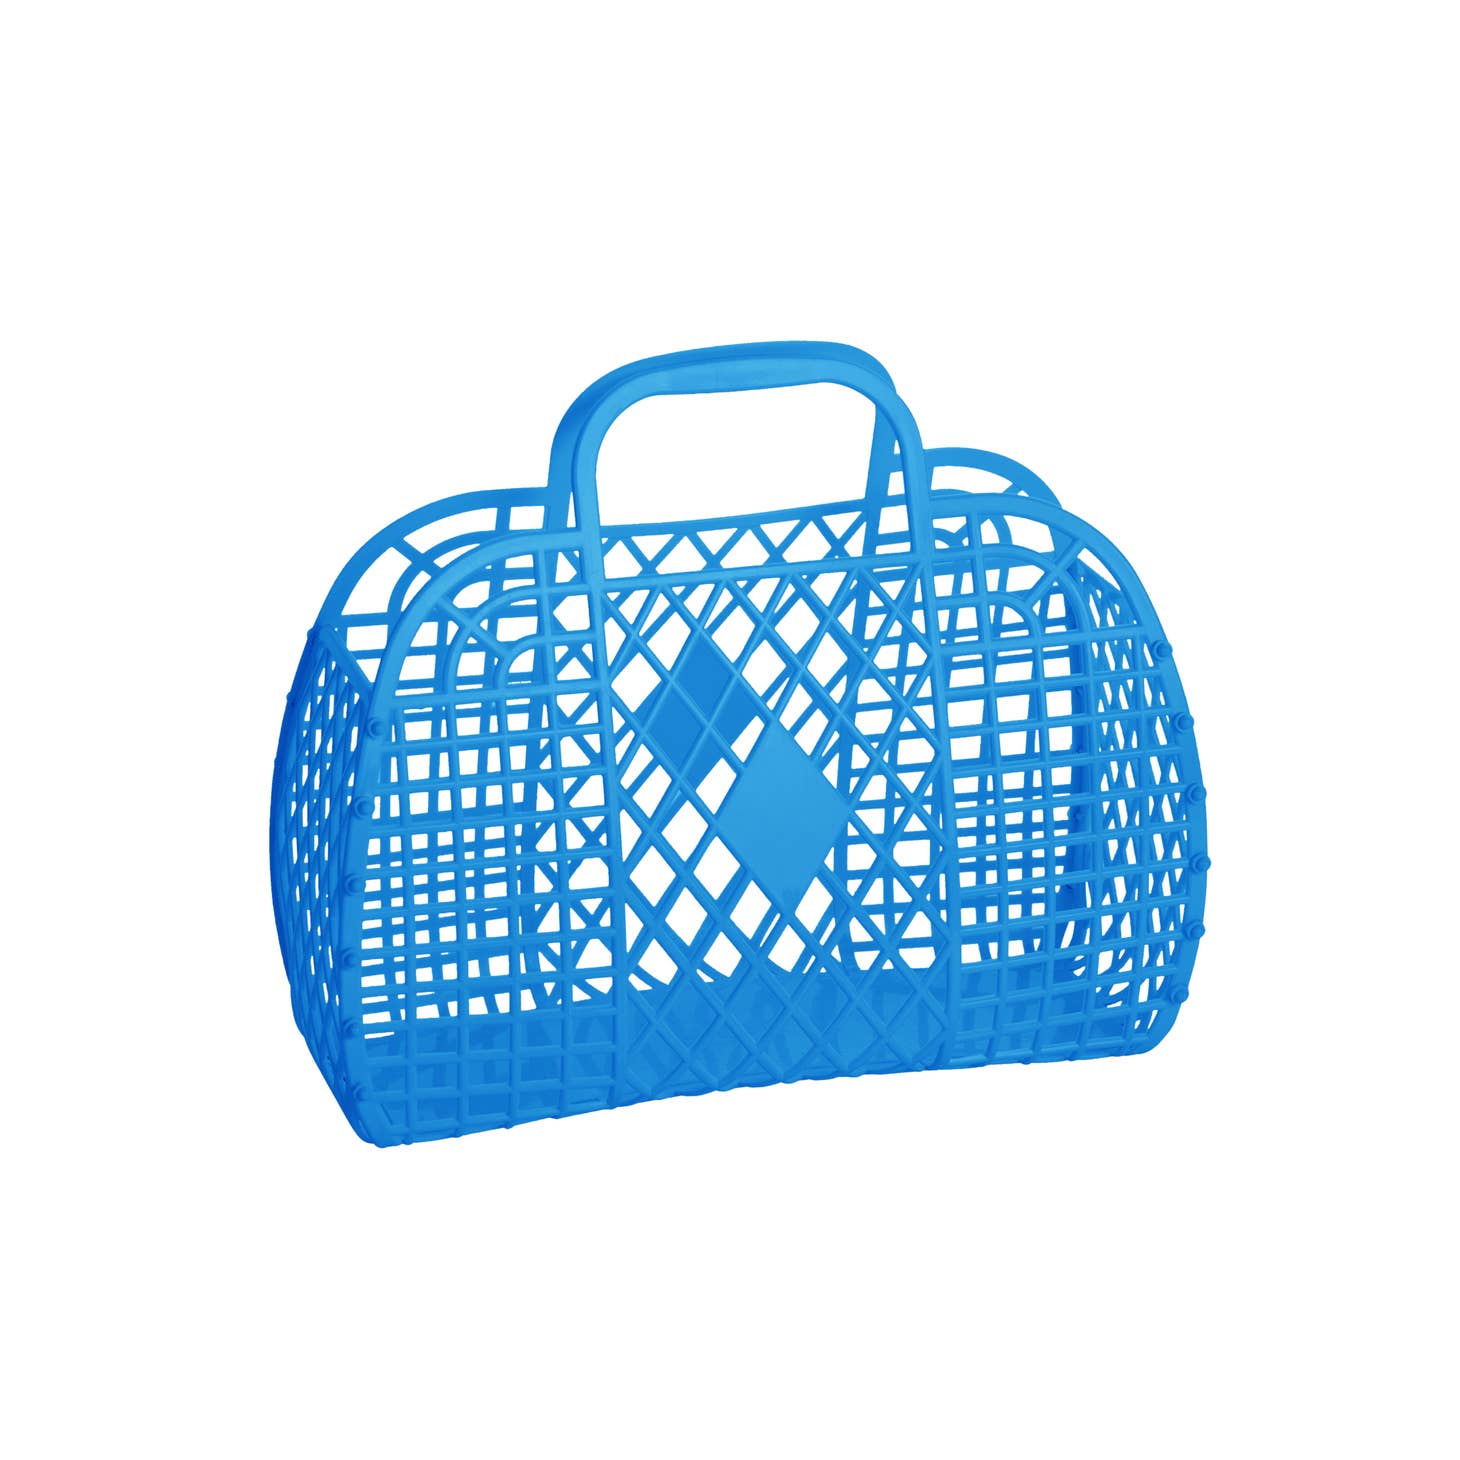 A small royal blue rectangular handbag made of plastic with a retro diamond and lattice pattern